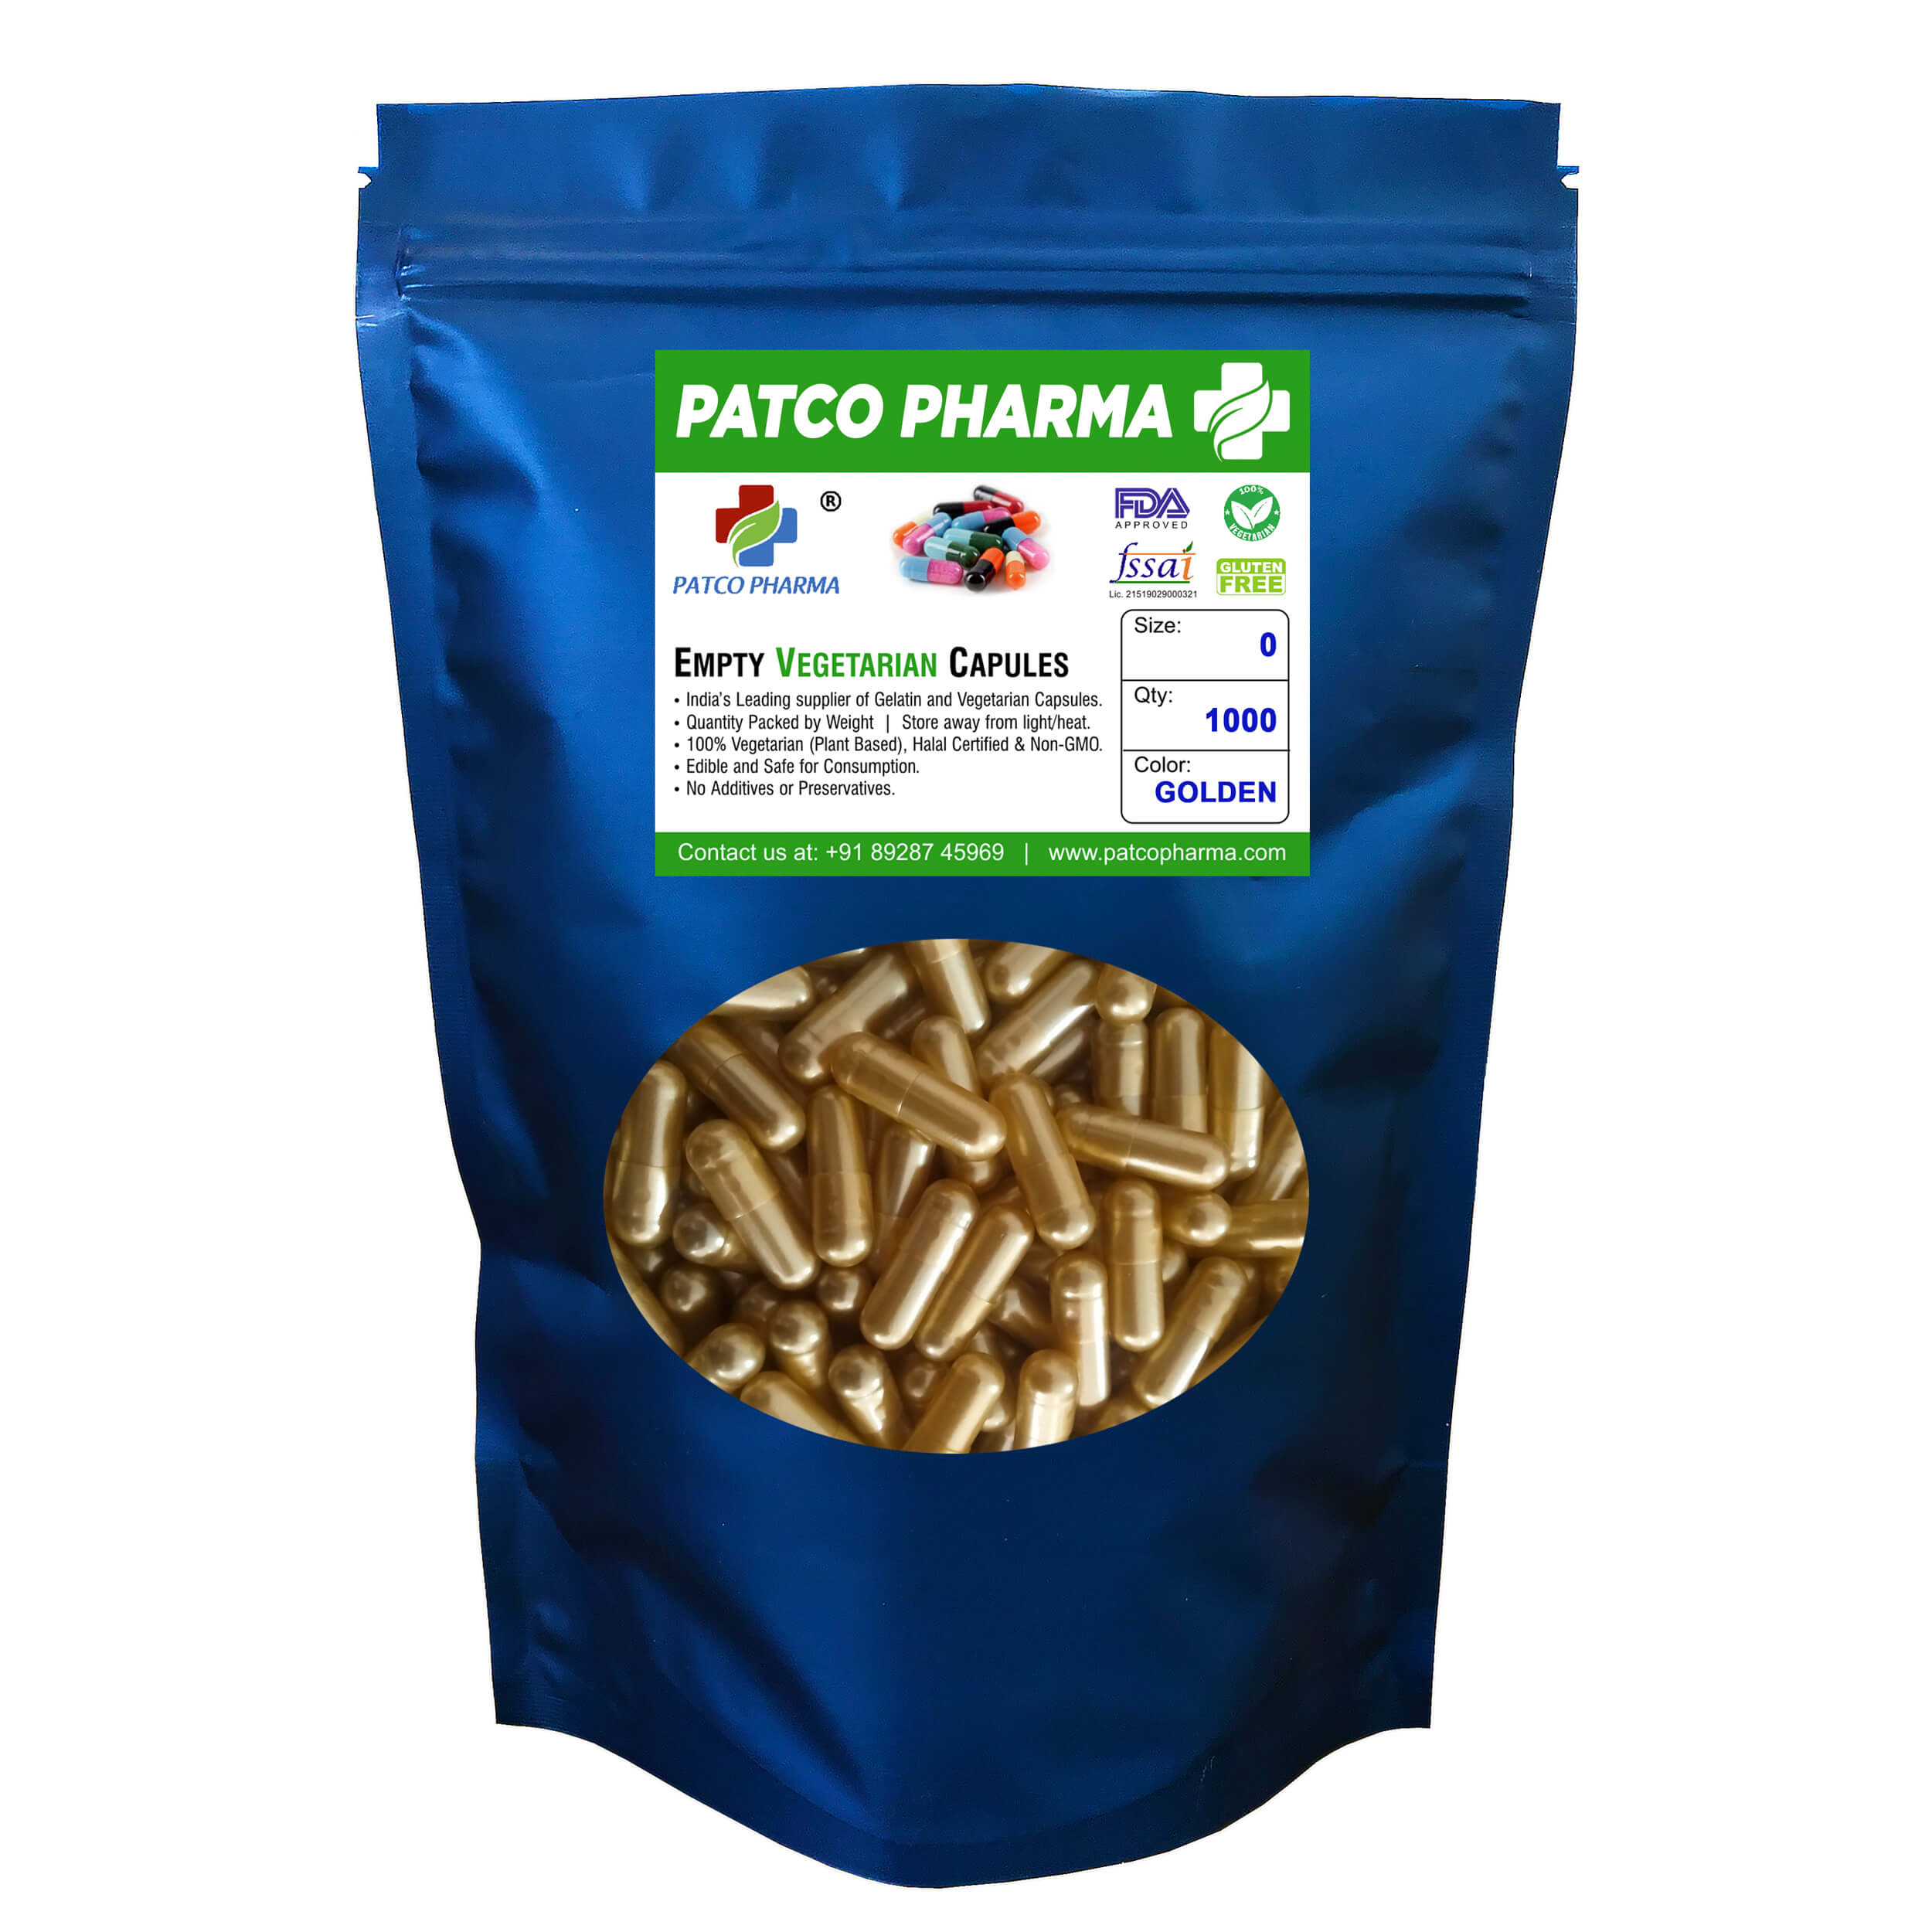 Patco Pharma empty vegetarian size 0 golden capsule shell